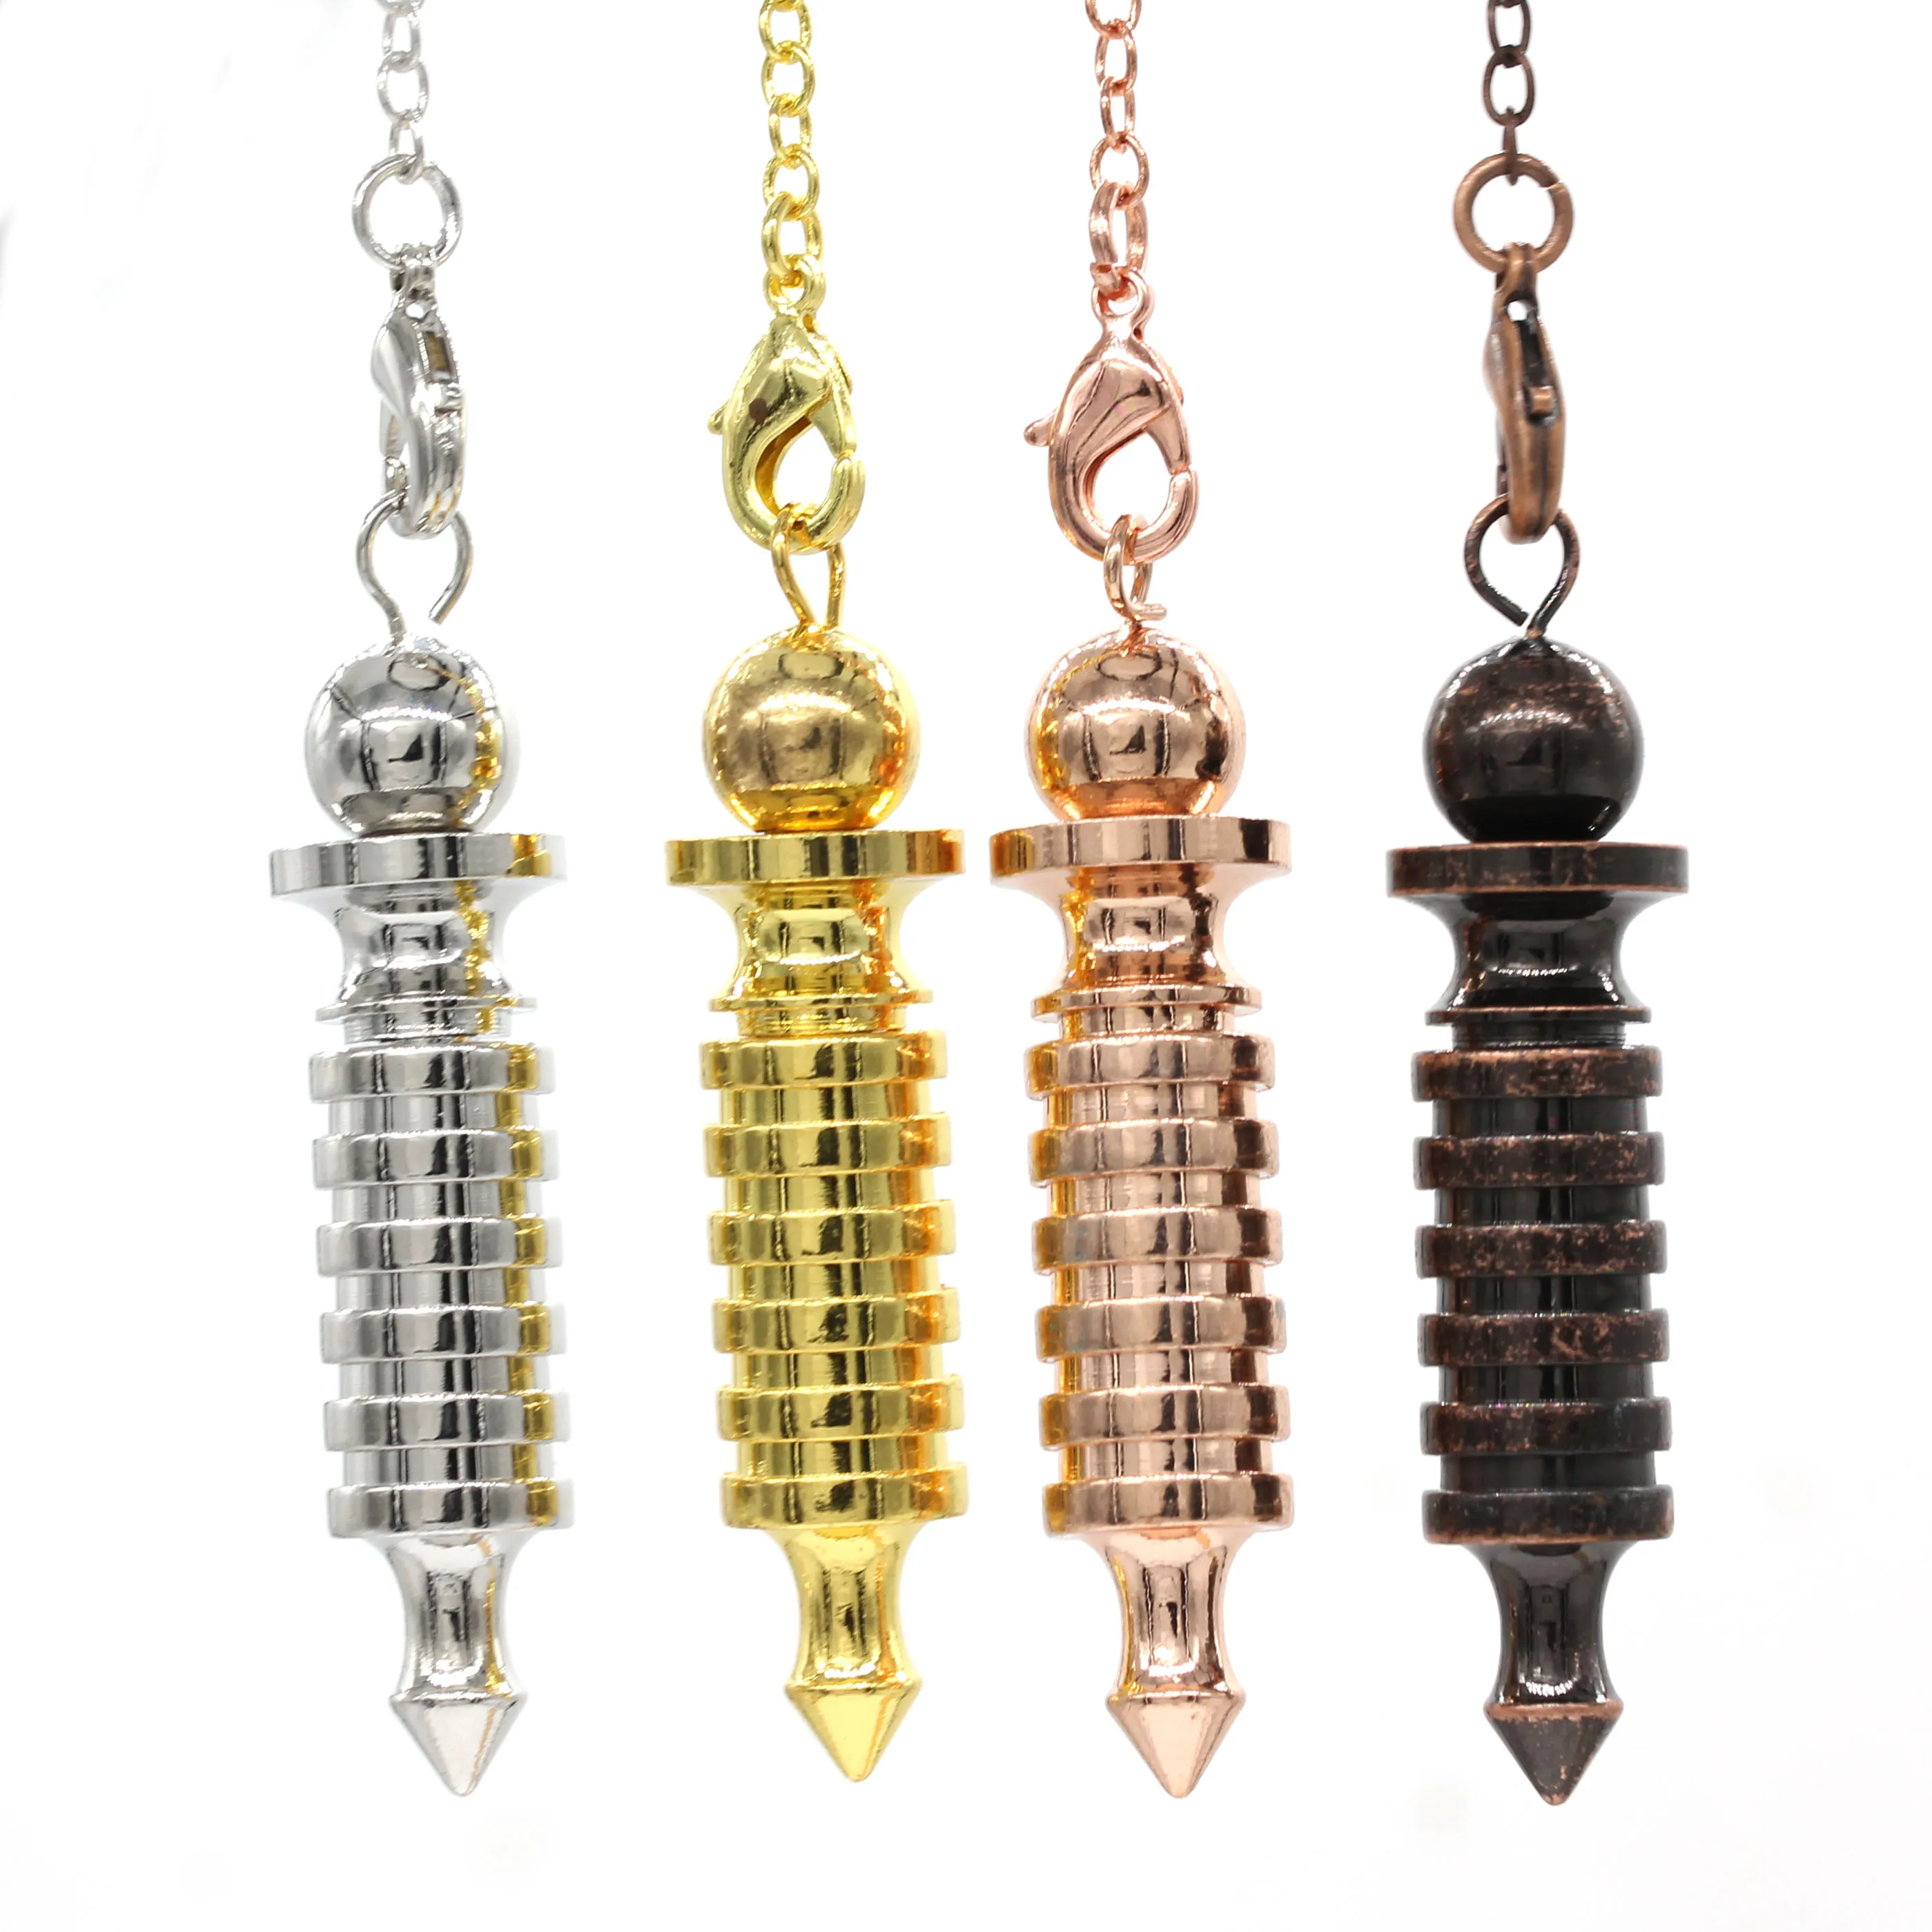 

100-Unique 1 Pcs Many Colors Metal Spiral Shape Pendulum for Dowsing Pendant Link Chain Jewelry